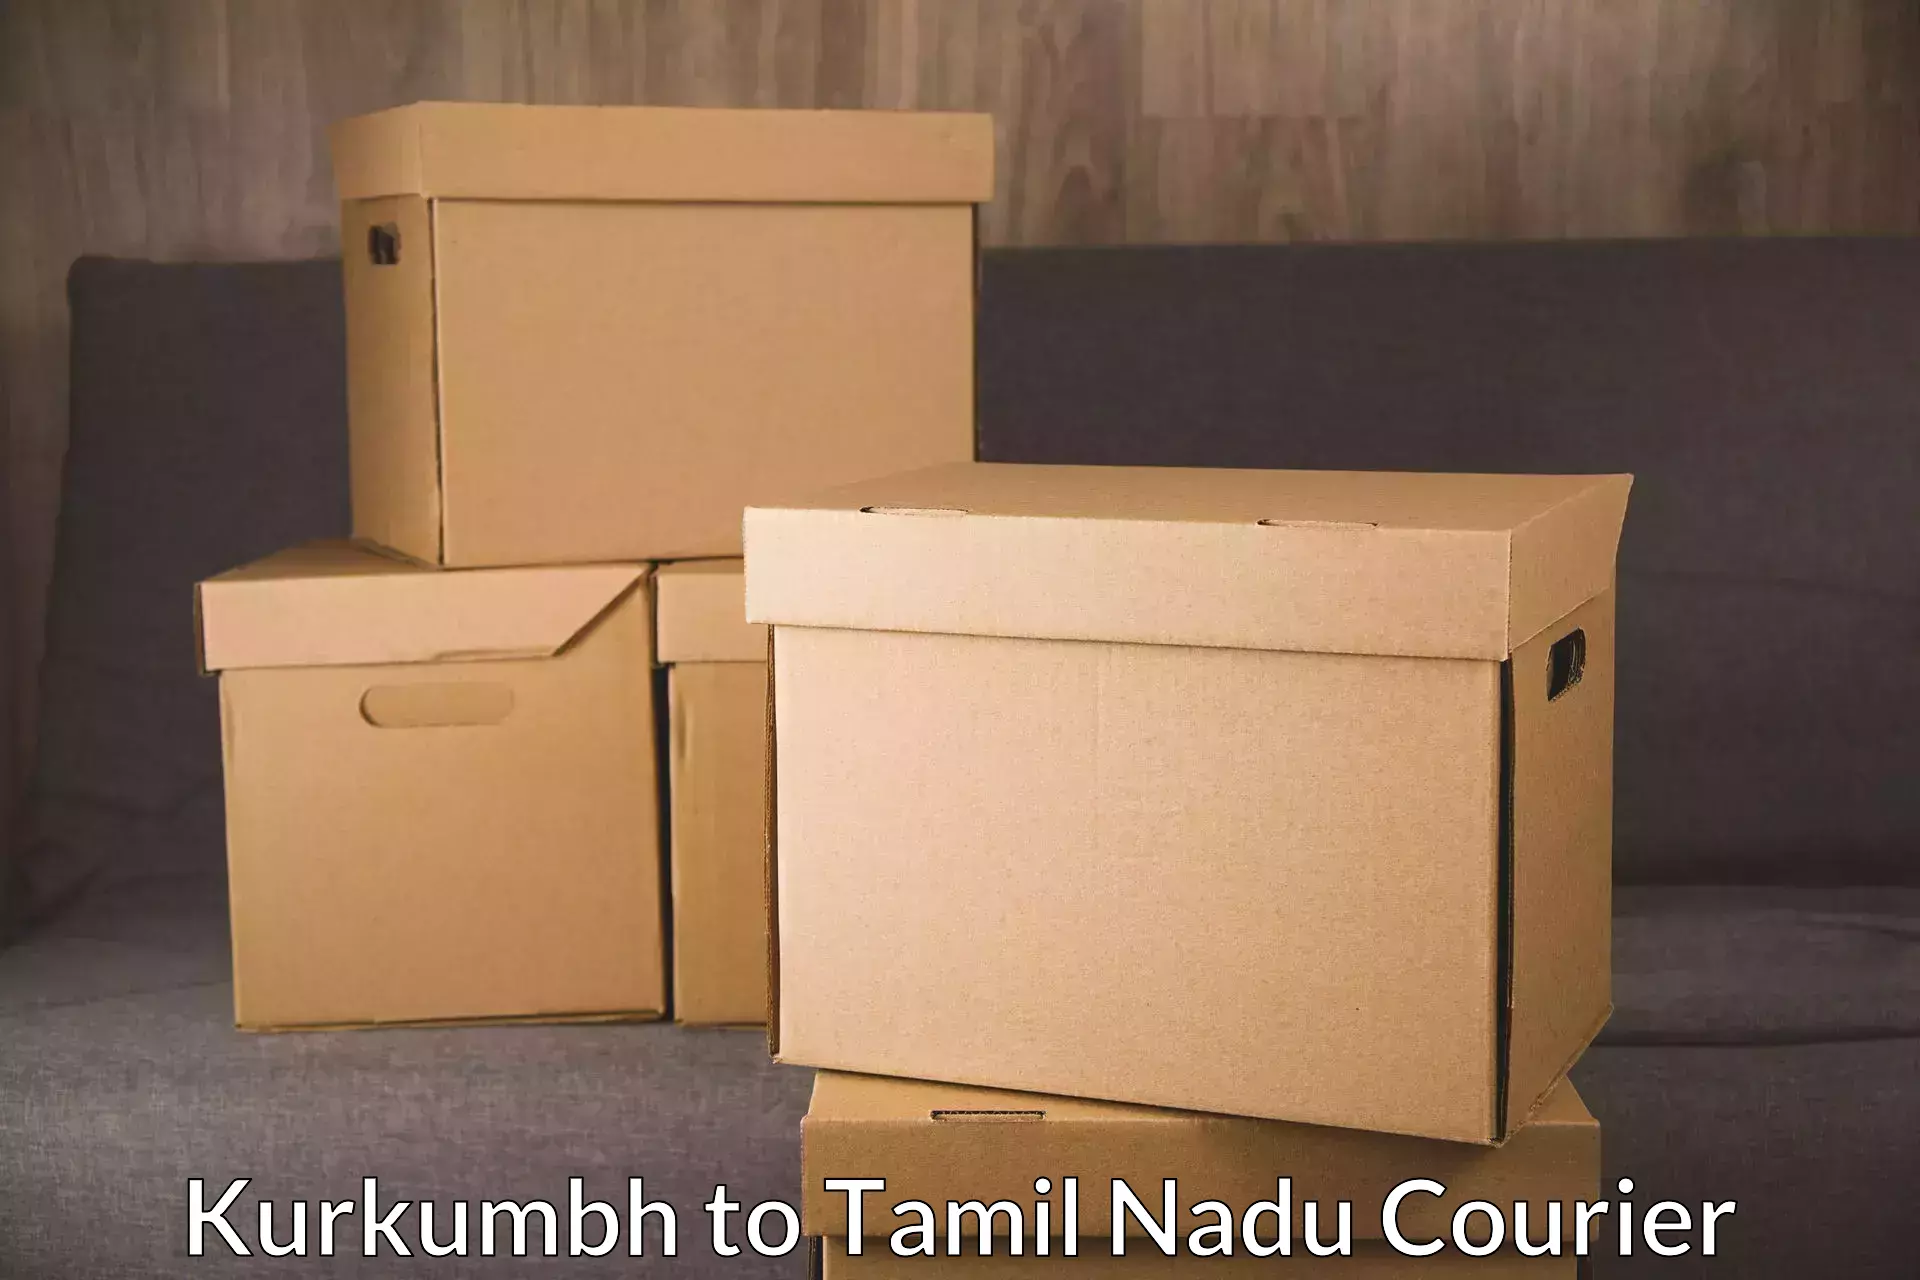 High-speed parcel service Kurkumbh to Tamil Nadu